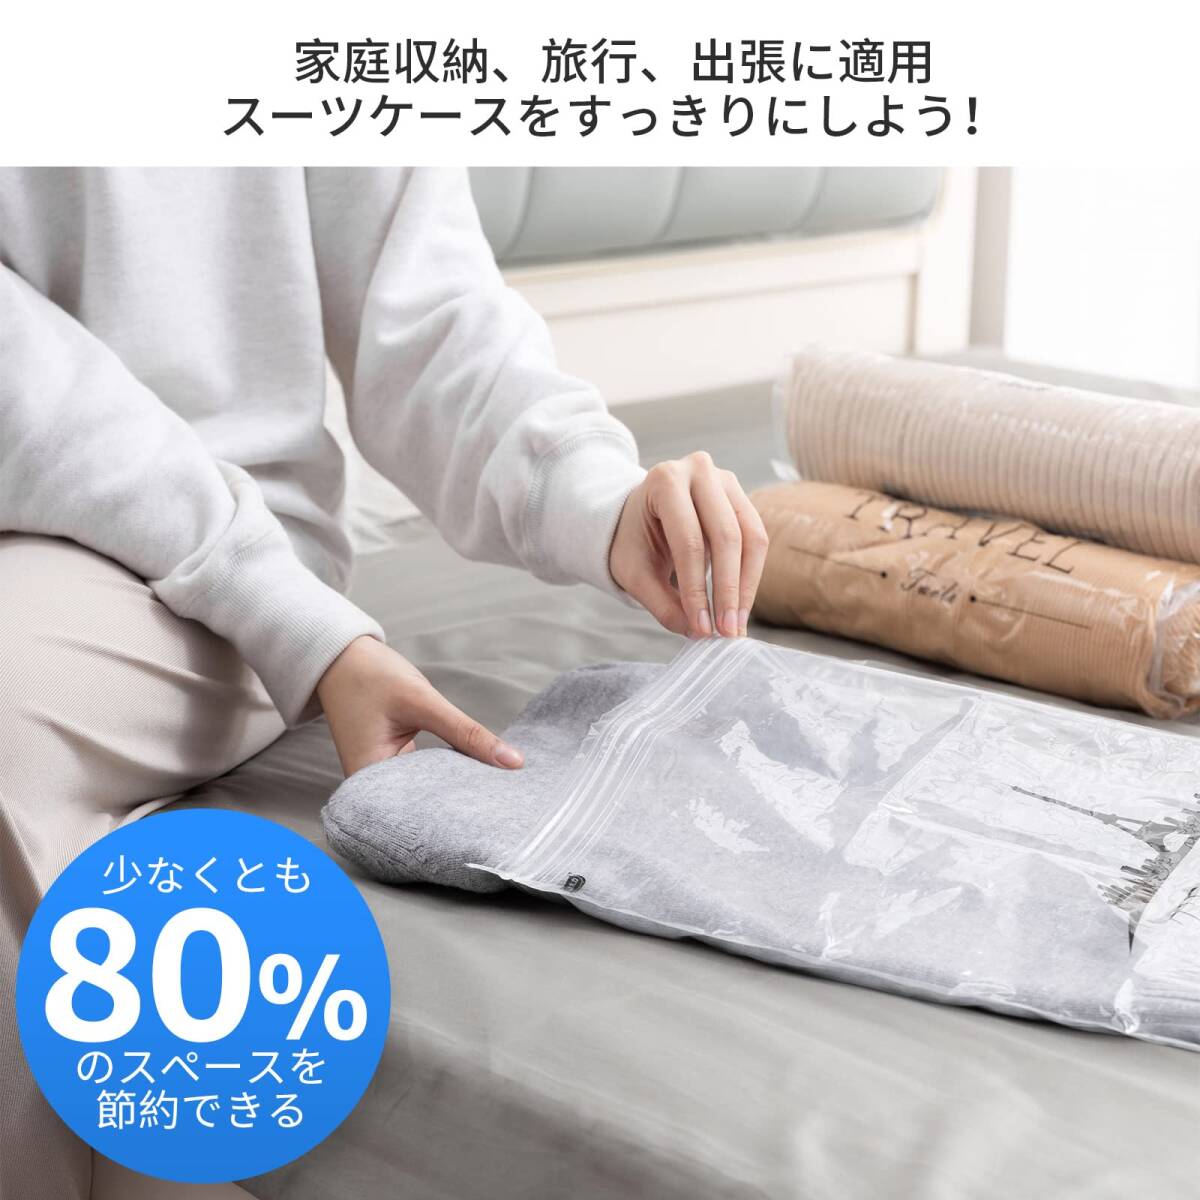  recommendation clothes vacuum bag 10 sheets insertion vacuum durability eminent compact design 